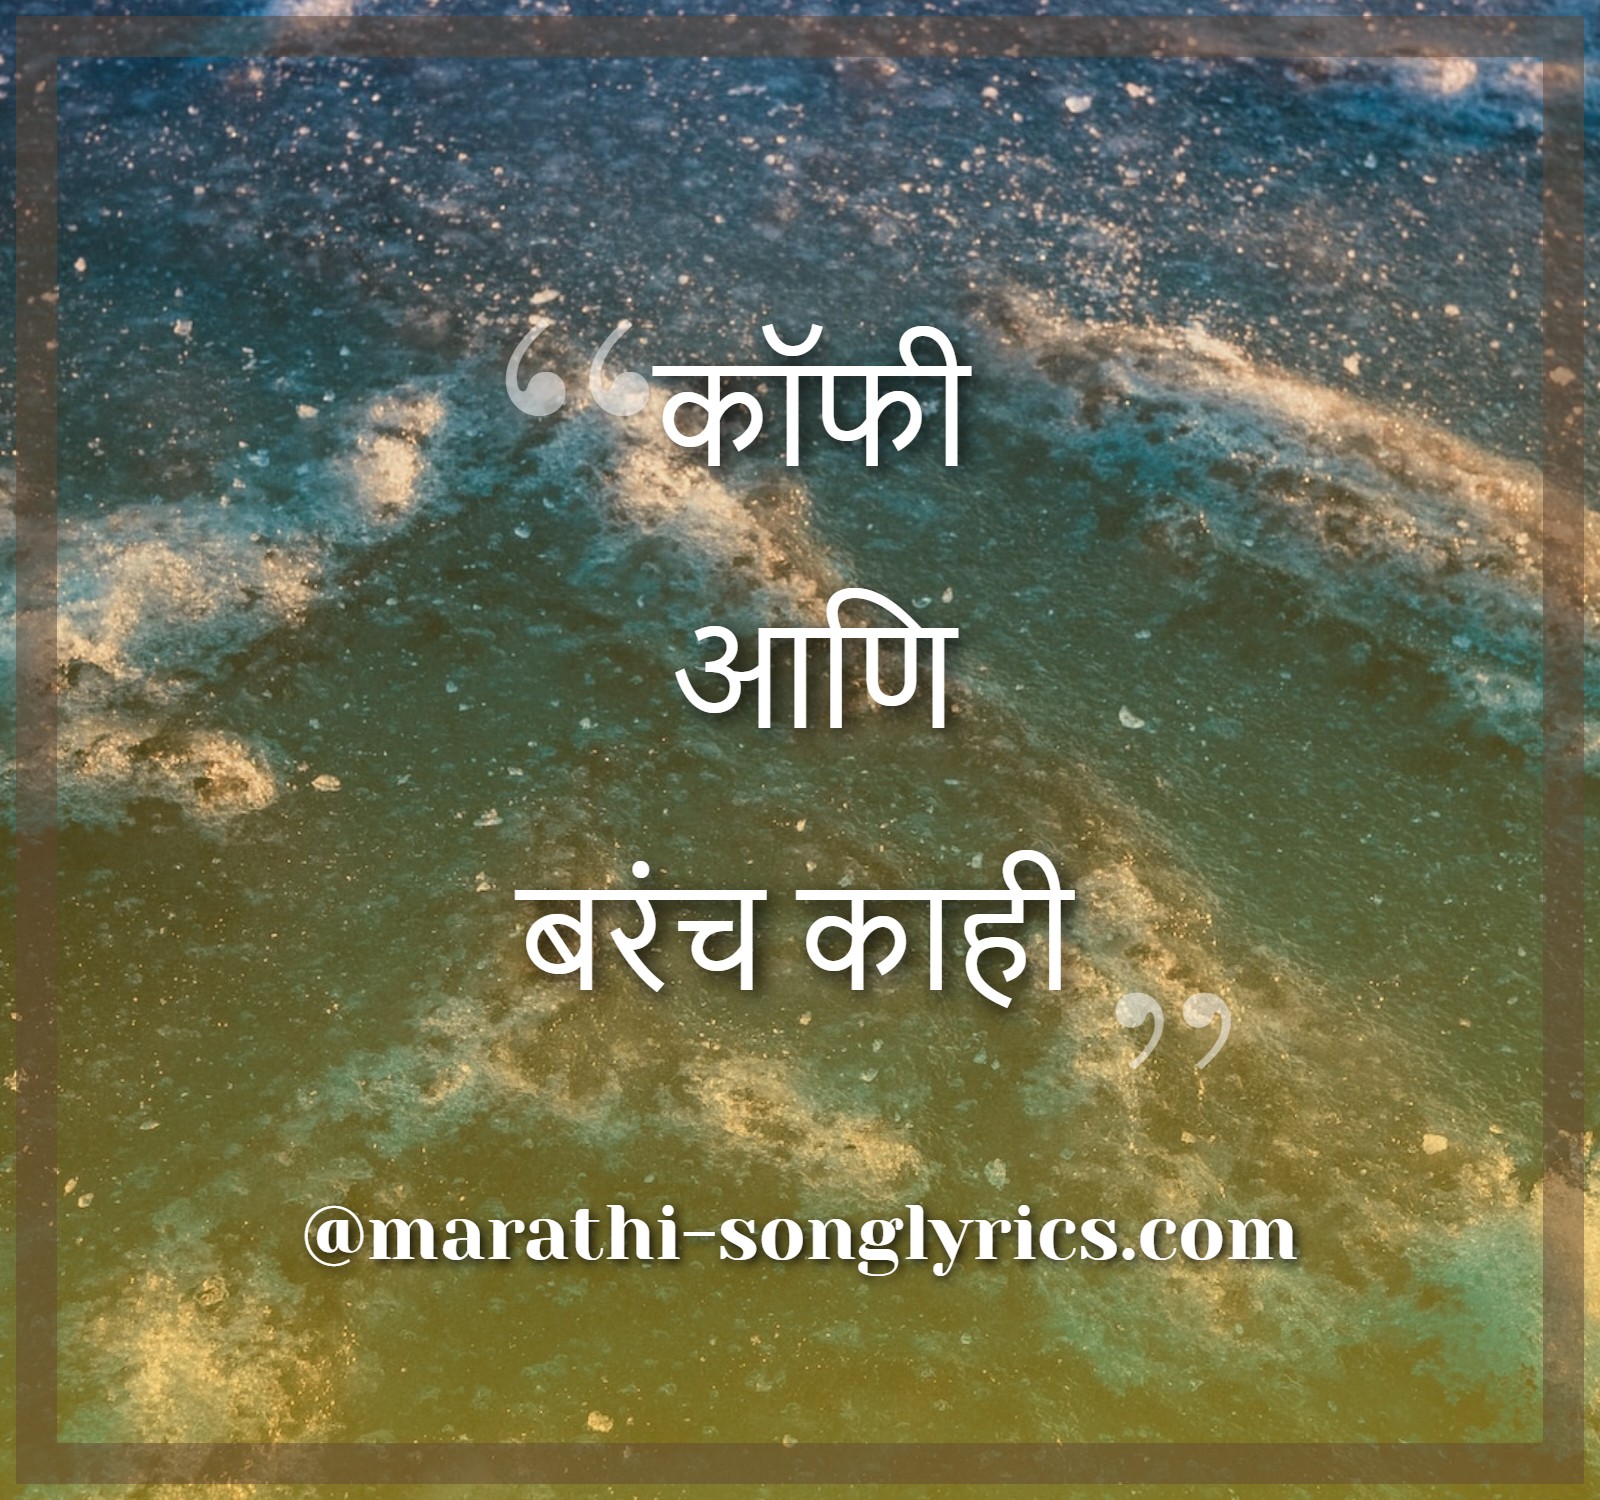 Coffee Ani Barach Kahi lyrics in Marathi